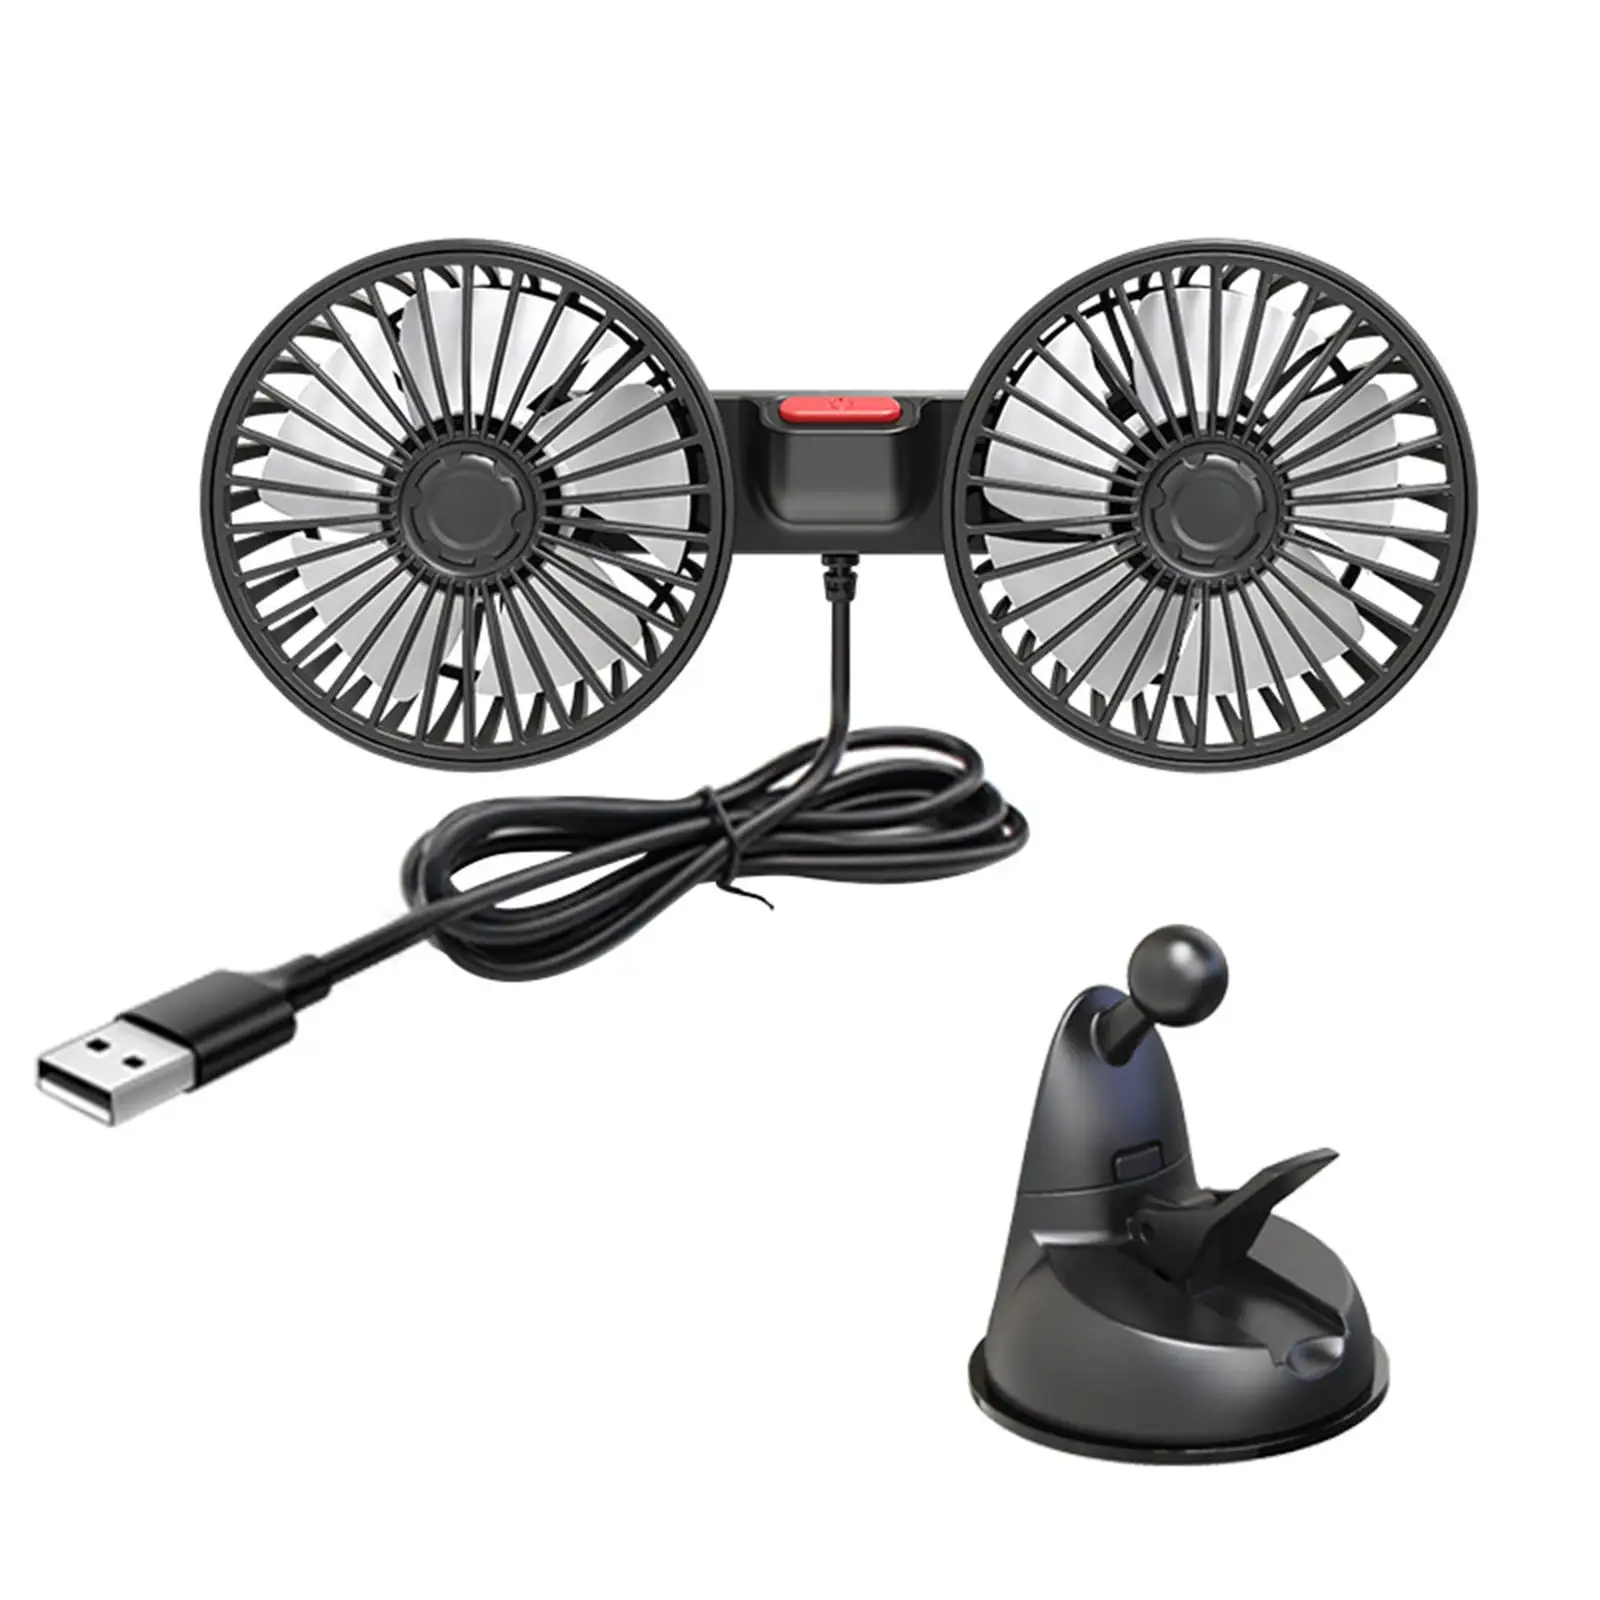 

Car Electric Fan 5V 10W 3 Speeds USB Air Cooler for Dashboard Truck RV